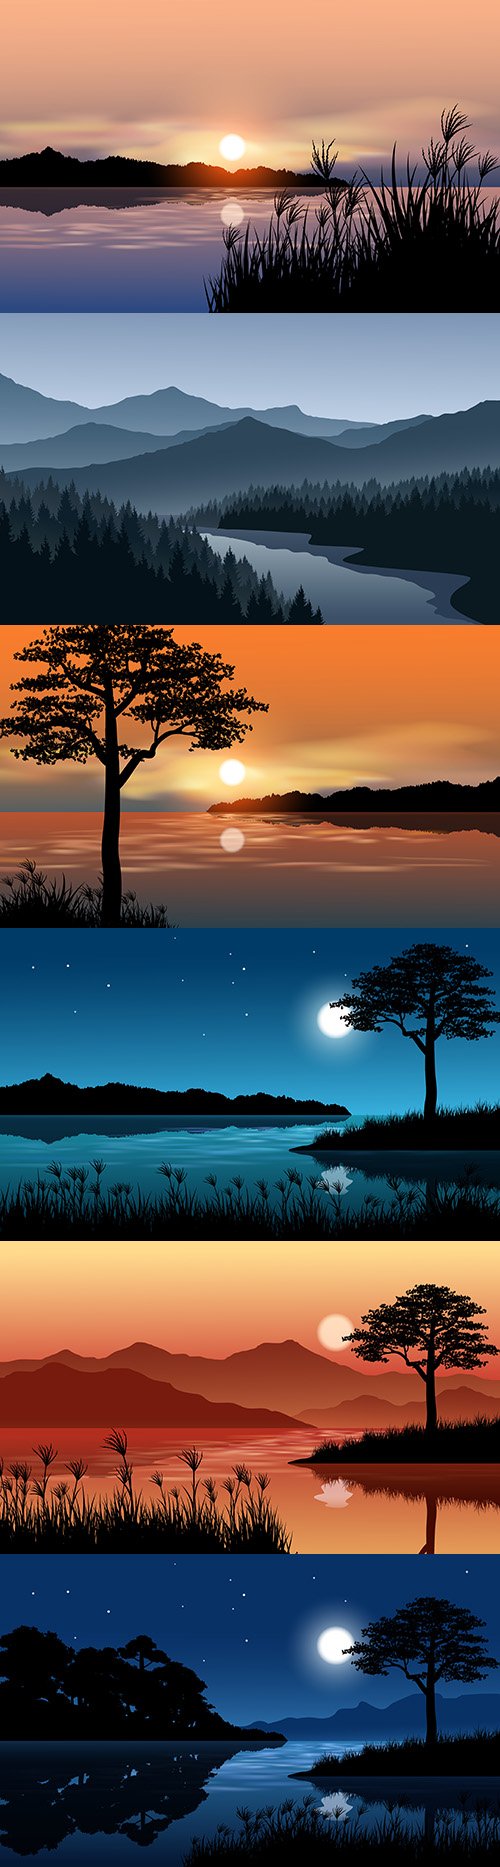 Night landscape at river and sunset illustration